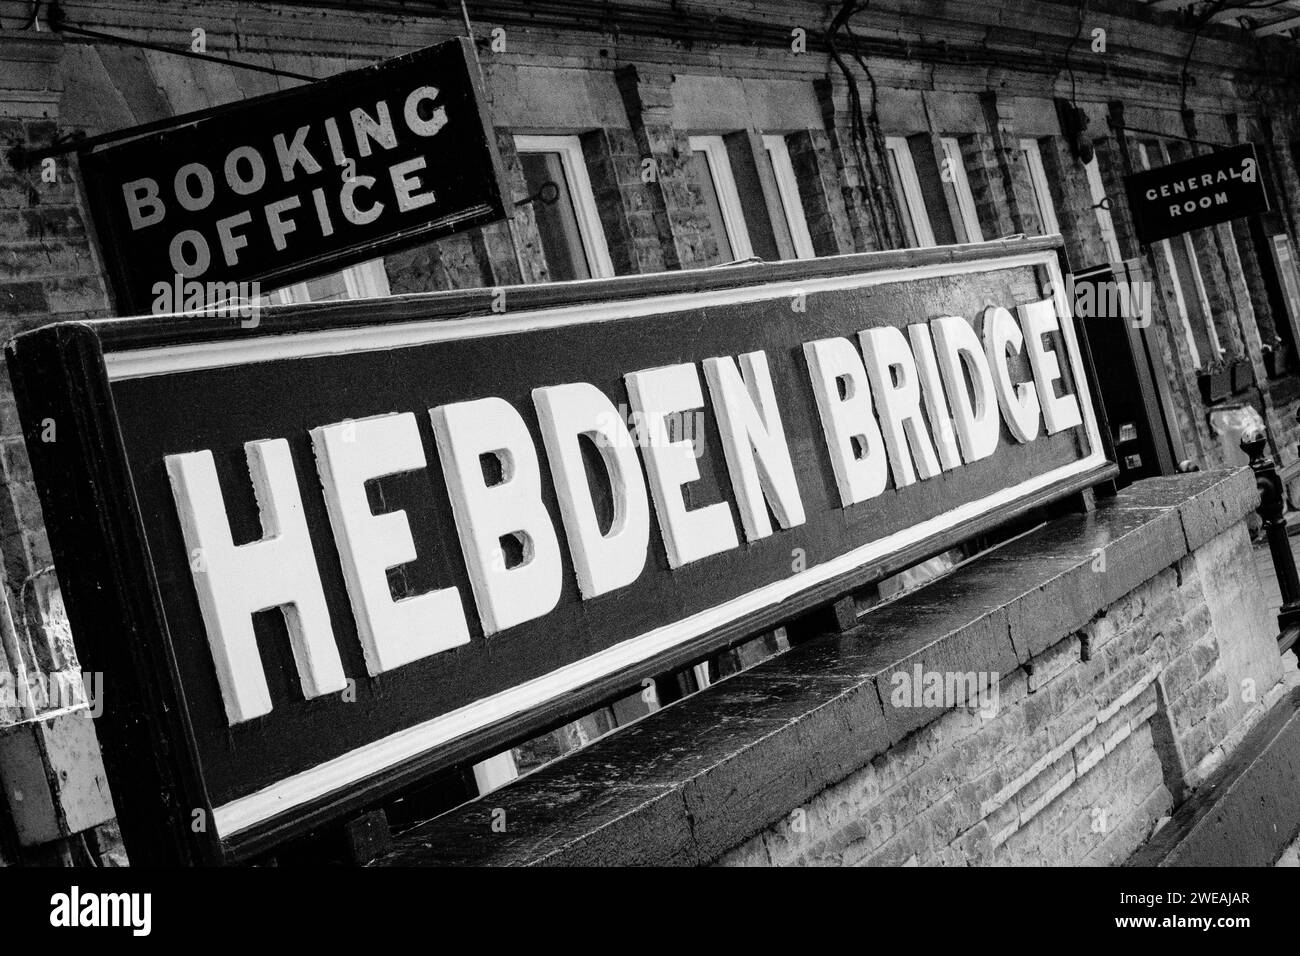 Hebden Bridge railway Station, Calderdale, West Yorkshire. Stock Photo